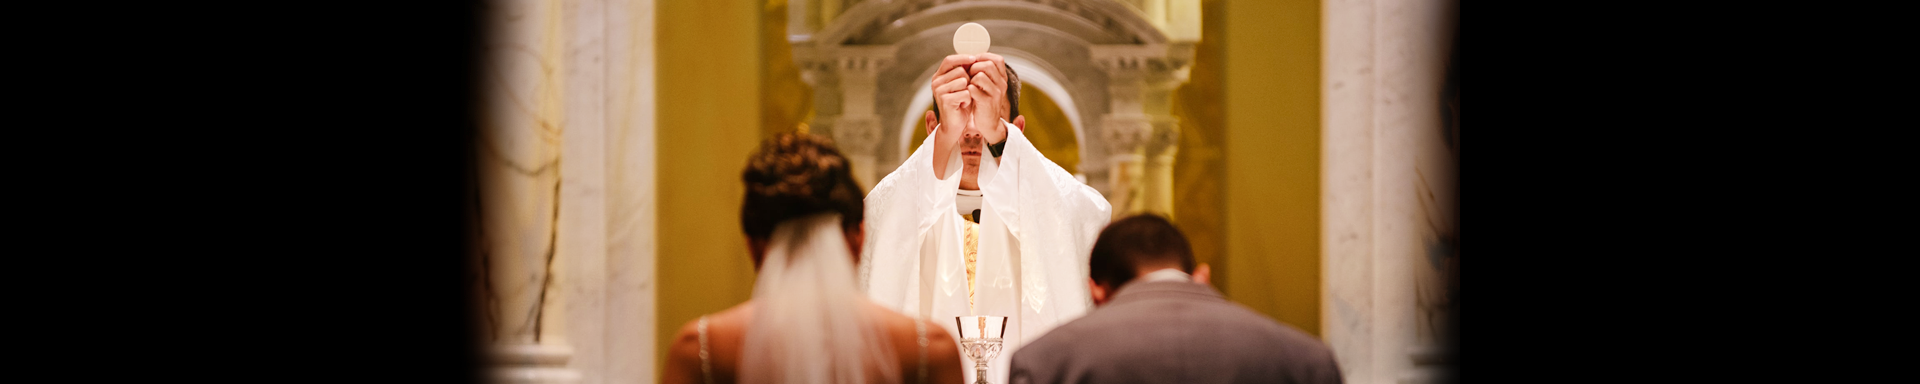 Image: Sacrament of Marriage